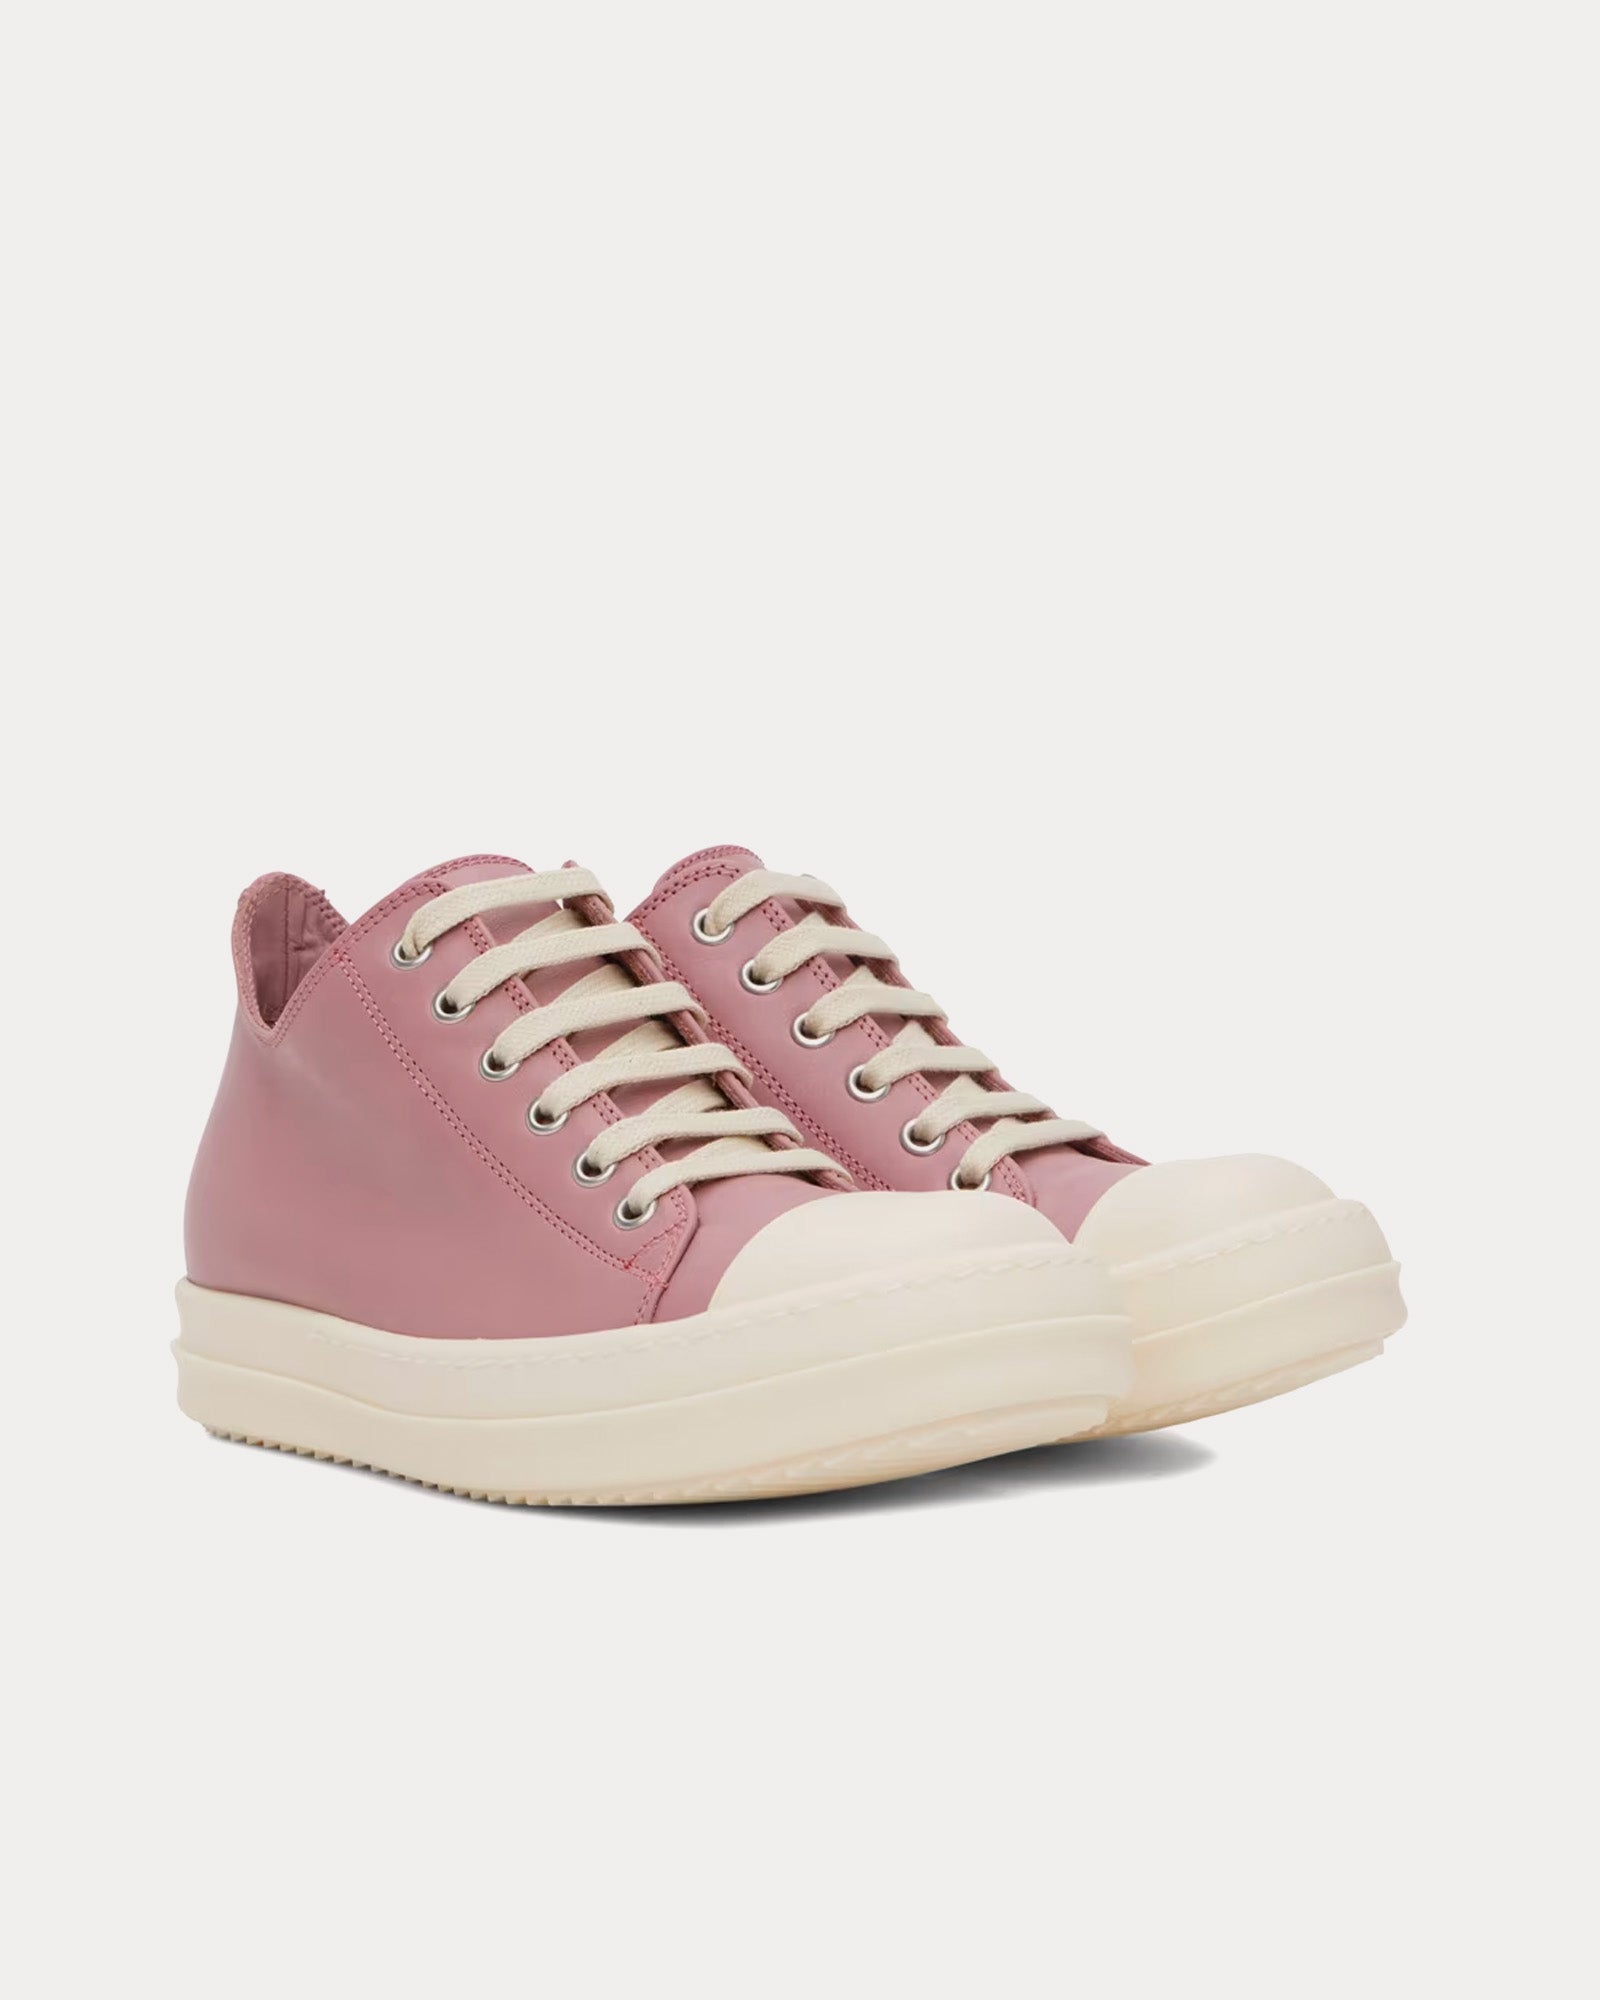 Rick Owens - Leather Dusty Pink / Milk Low Top Sneakers